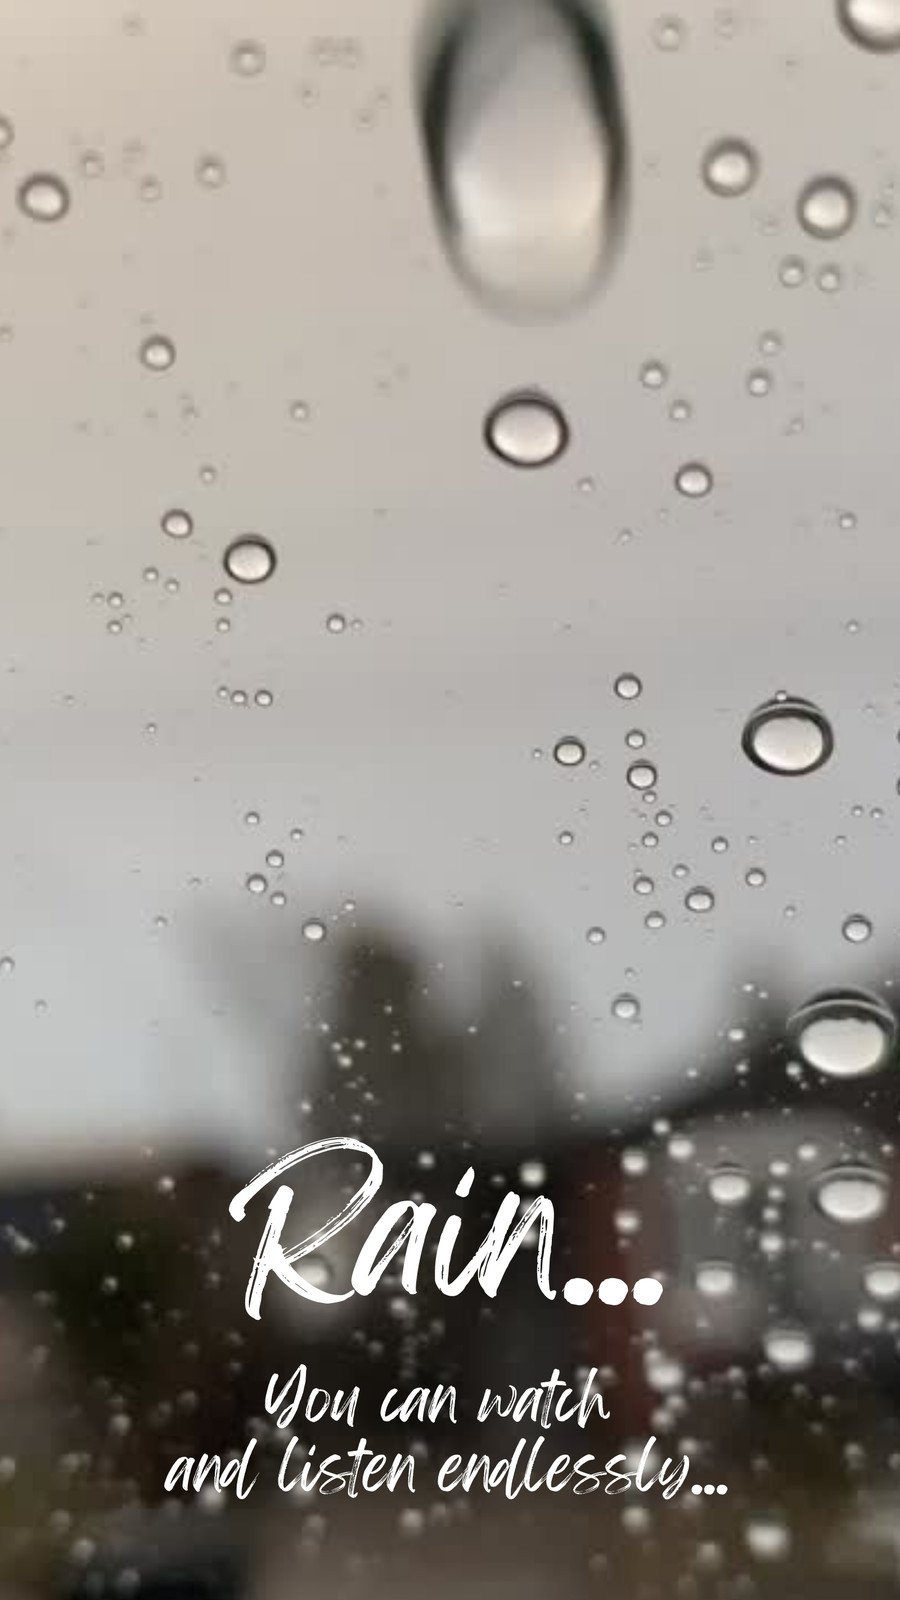 images of rain